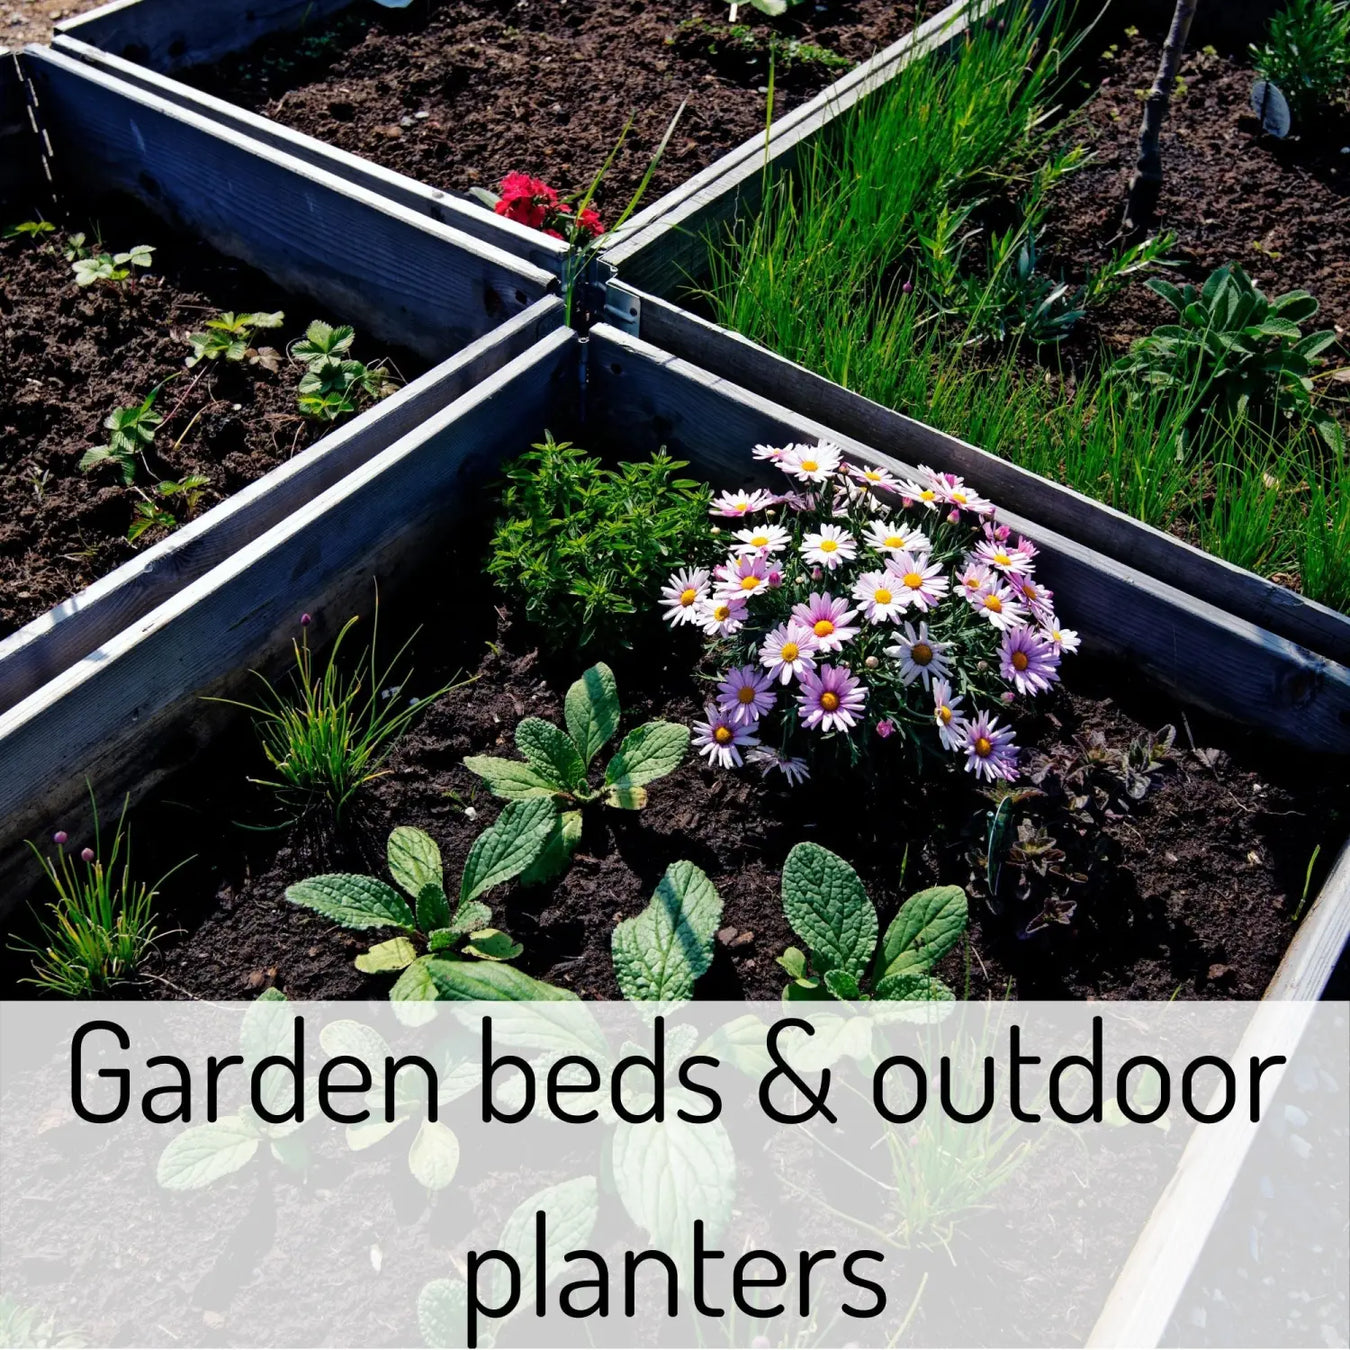 Garden beds and outdoor planters